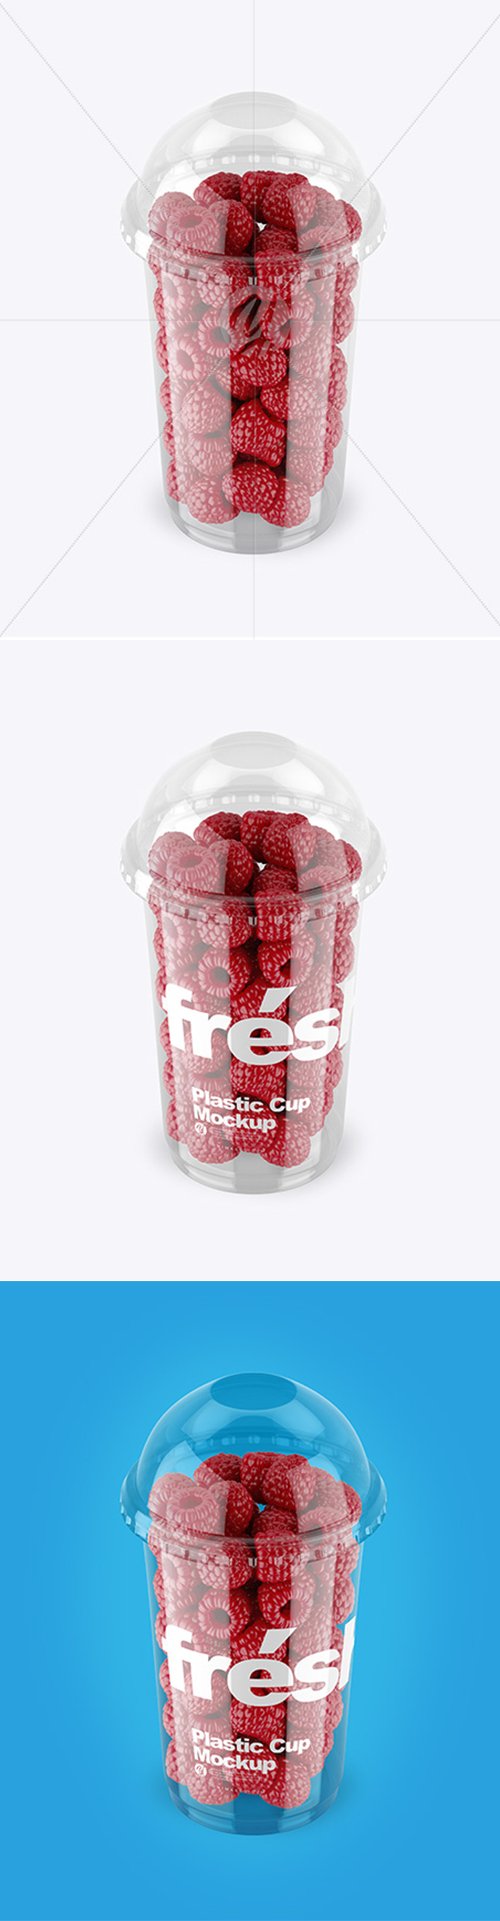 Plastic Cup With Raspberries Mockup 43179 TIF